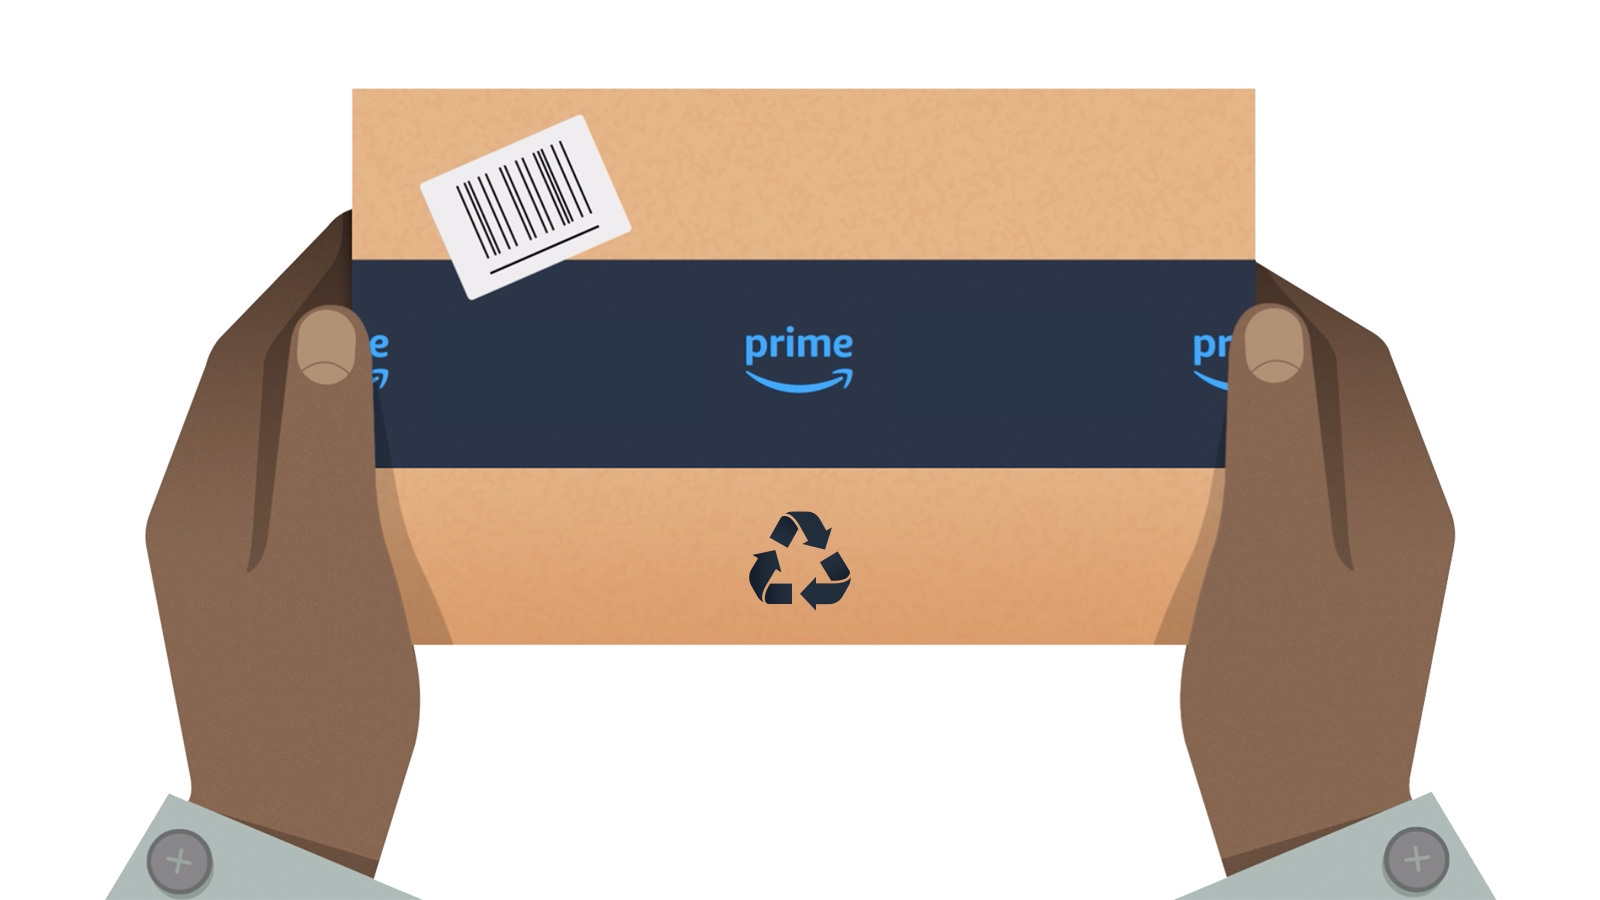 An illustration of an Amazon box.